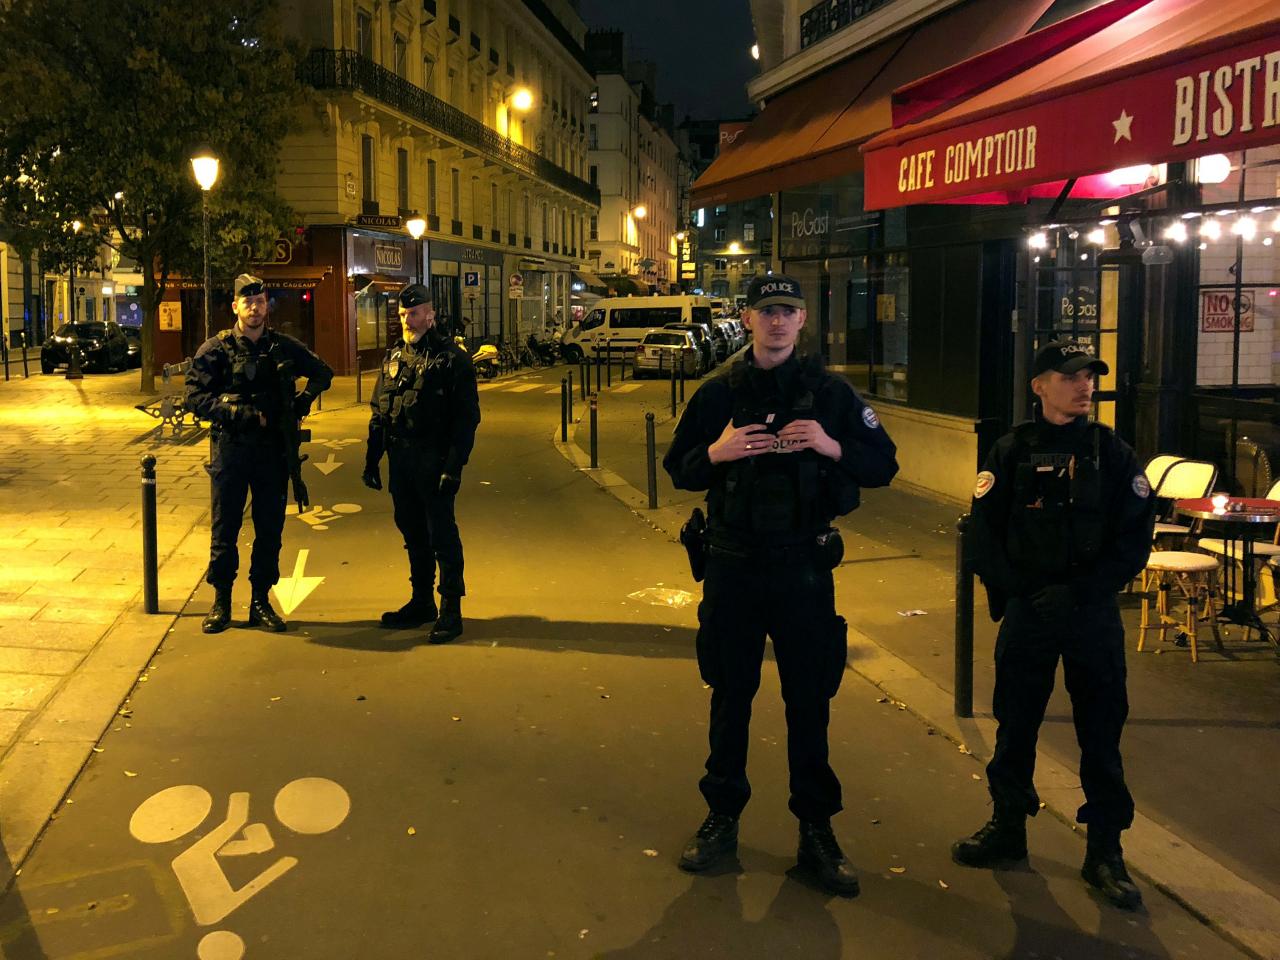 Friend of Paris knife attacker arrested in Strasbourg